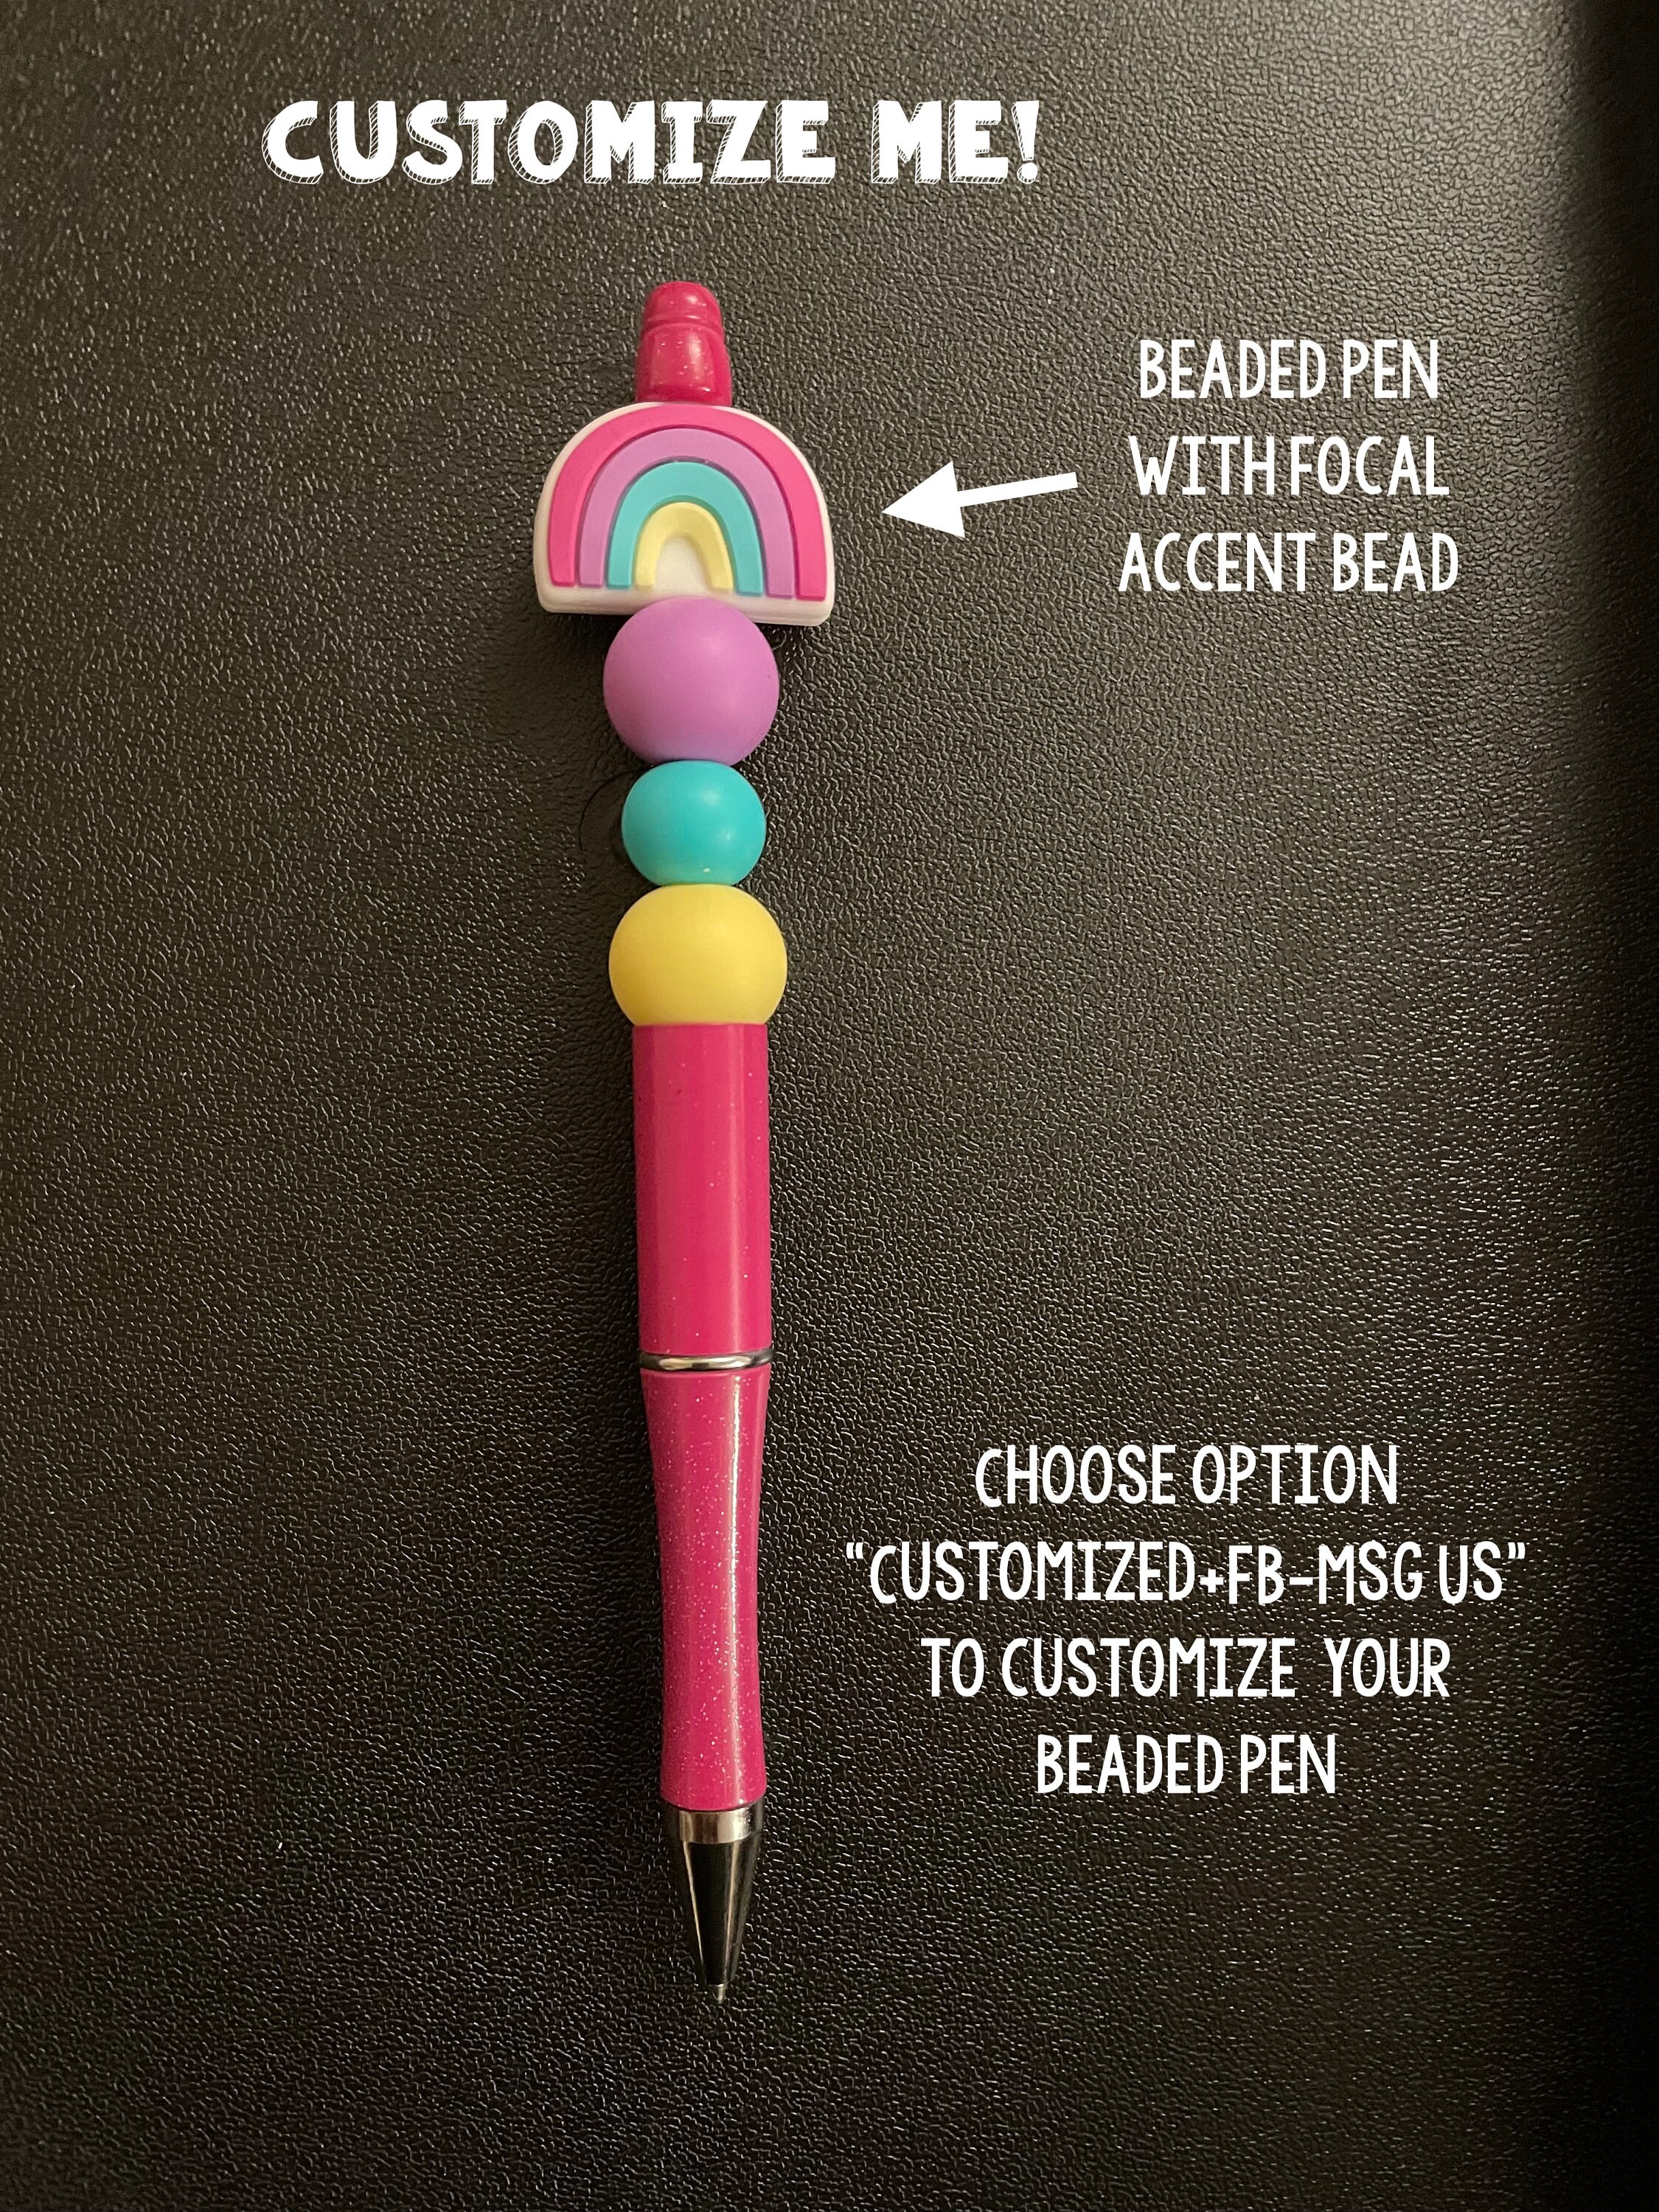 Customize Your Beaded Pen!